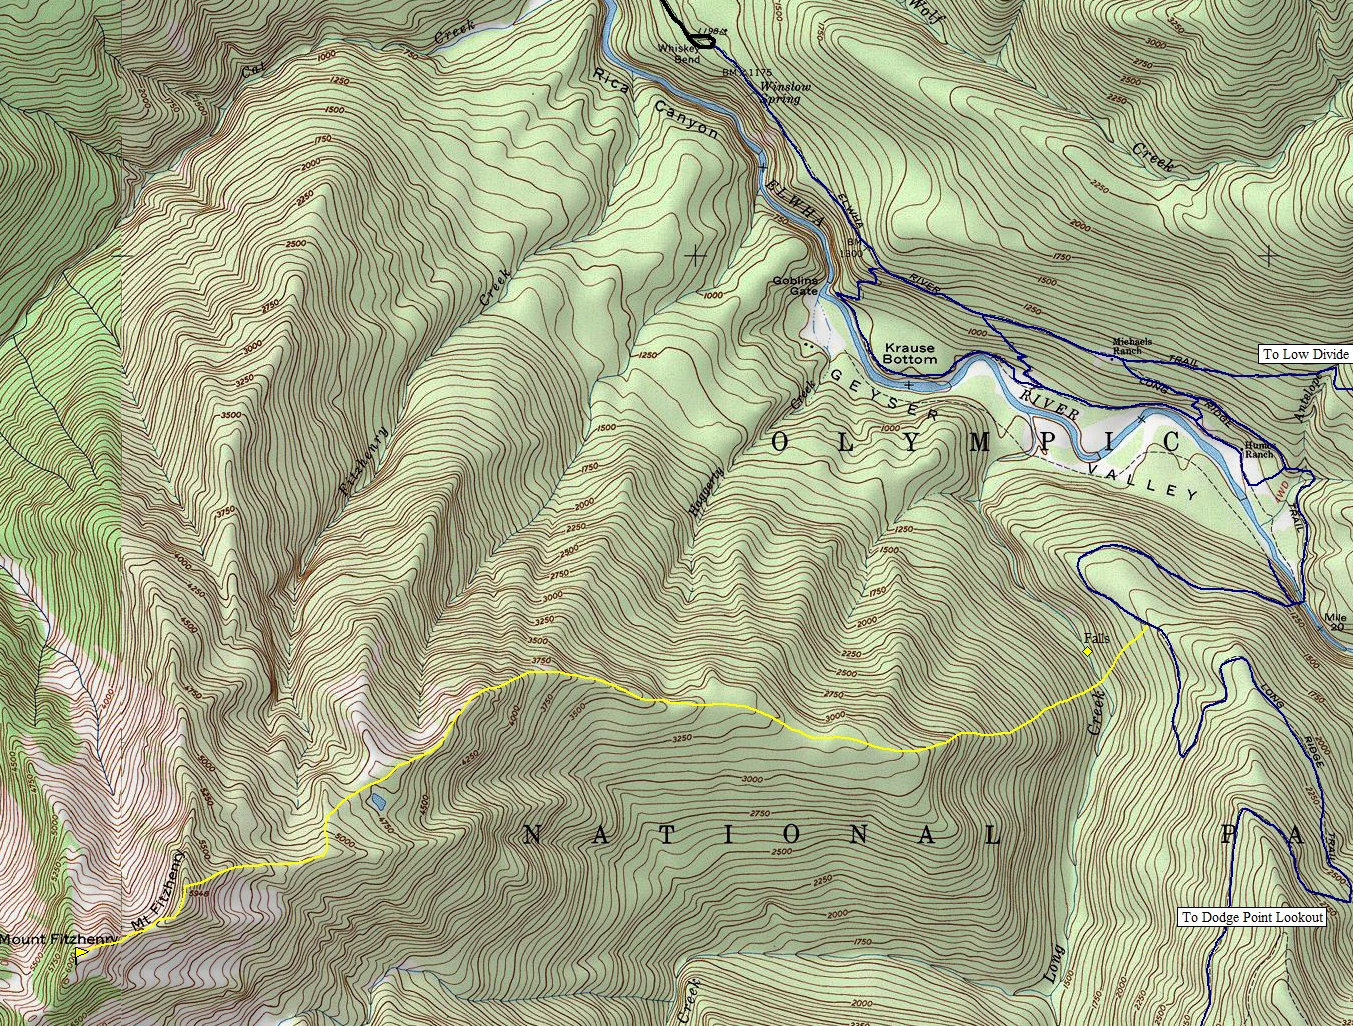 mount fitzhenry bailey range map